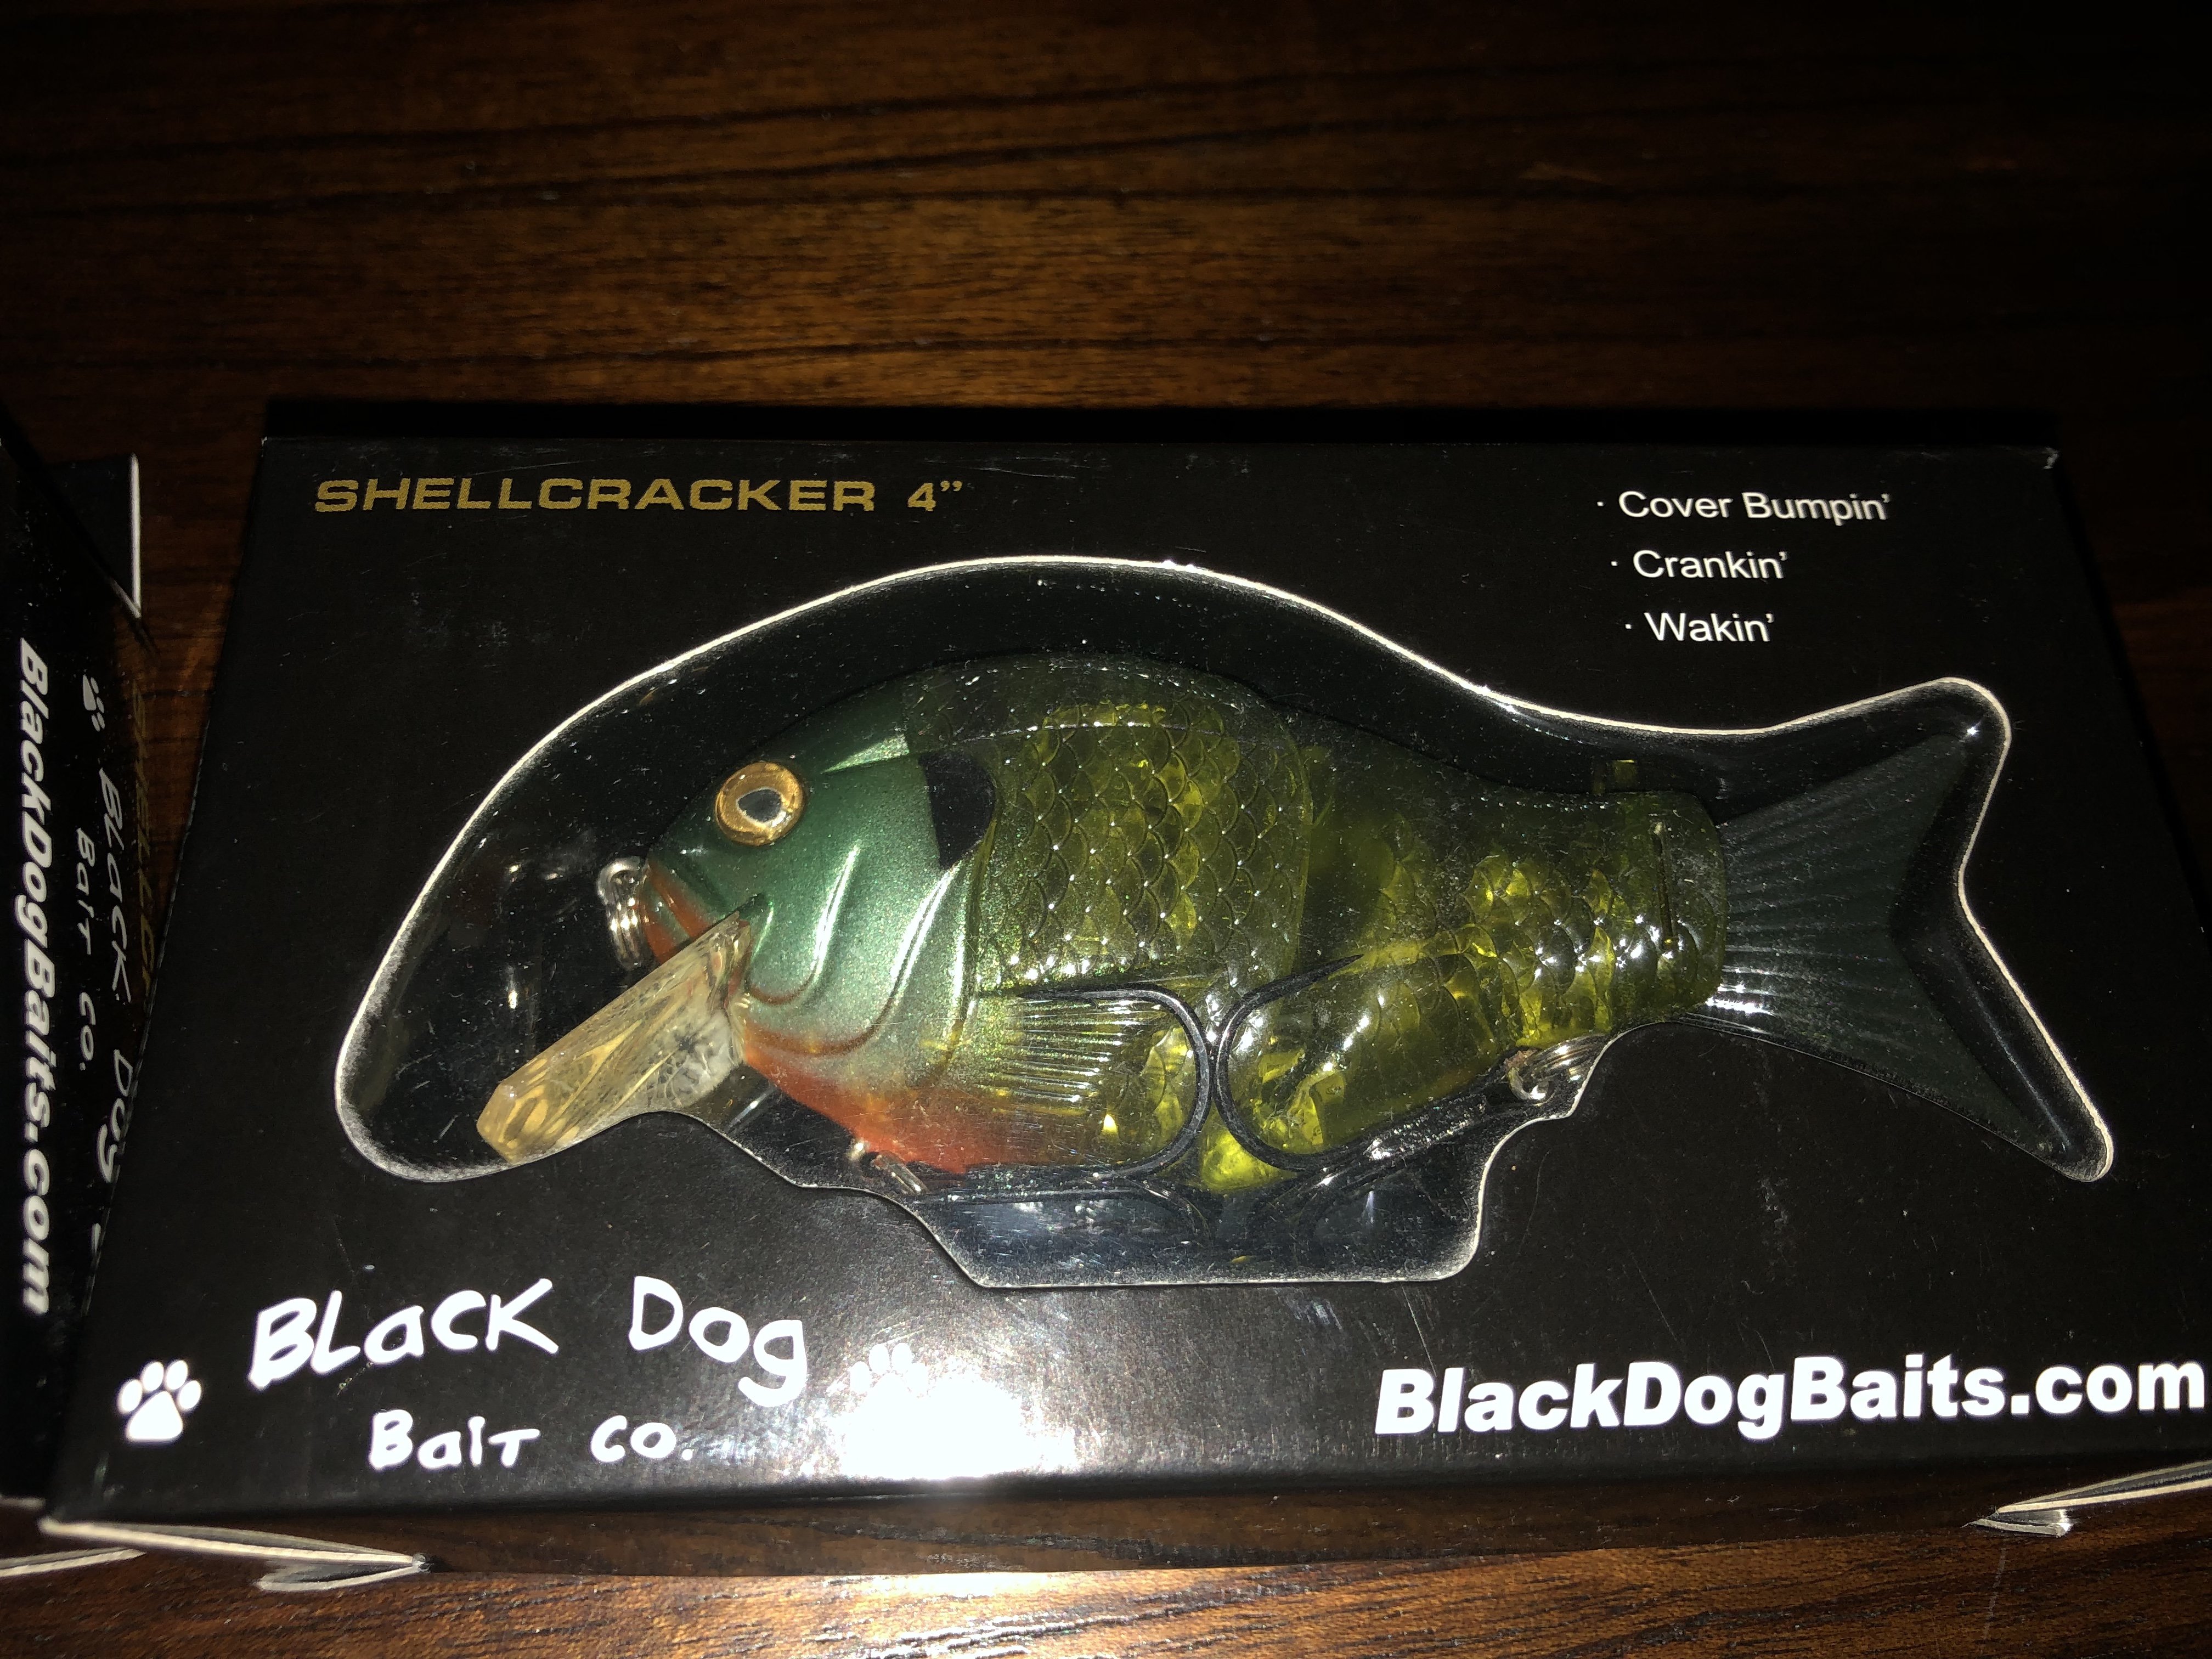 Black dog baits,shellcracker 4